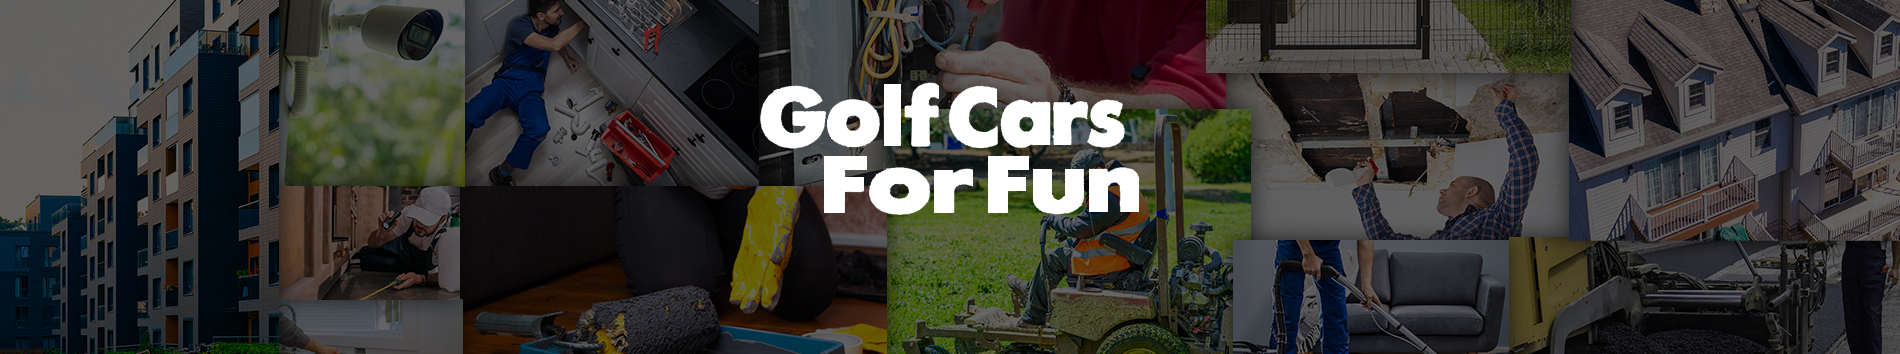 Golf Cars For Fun